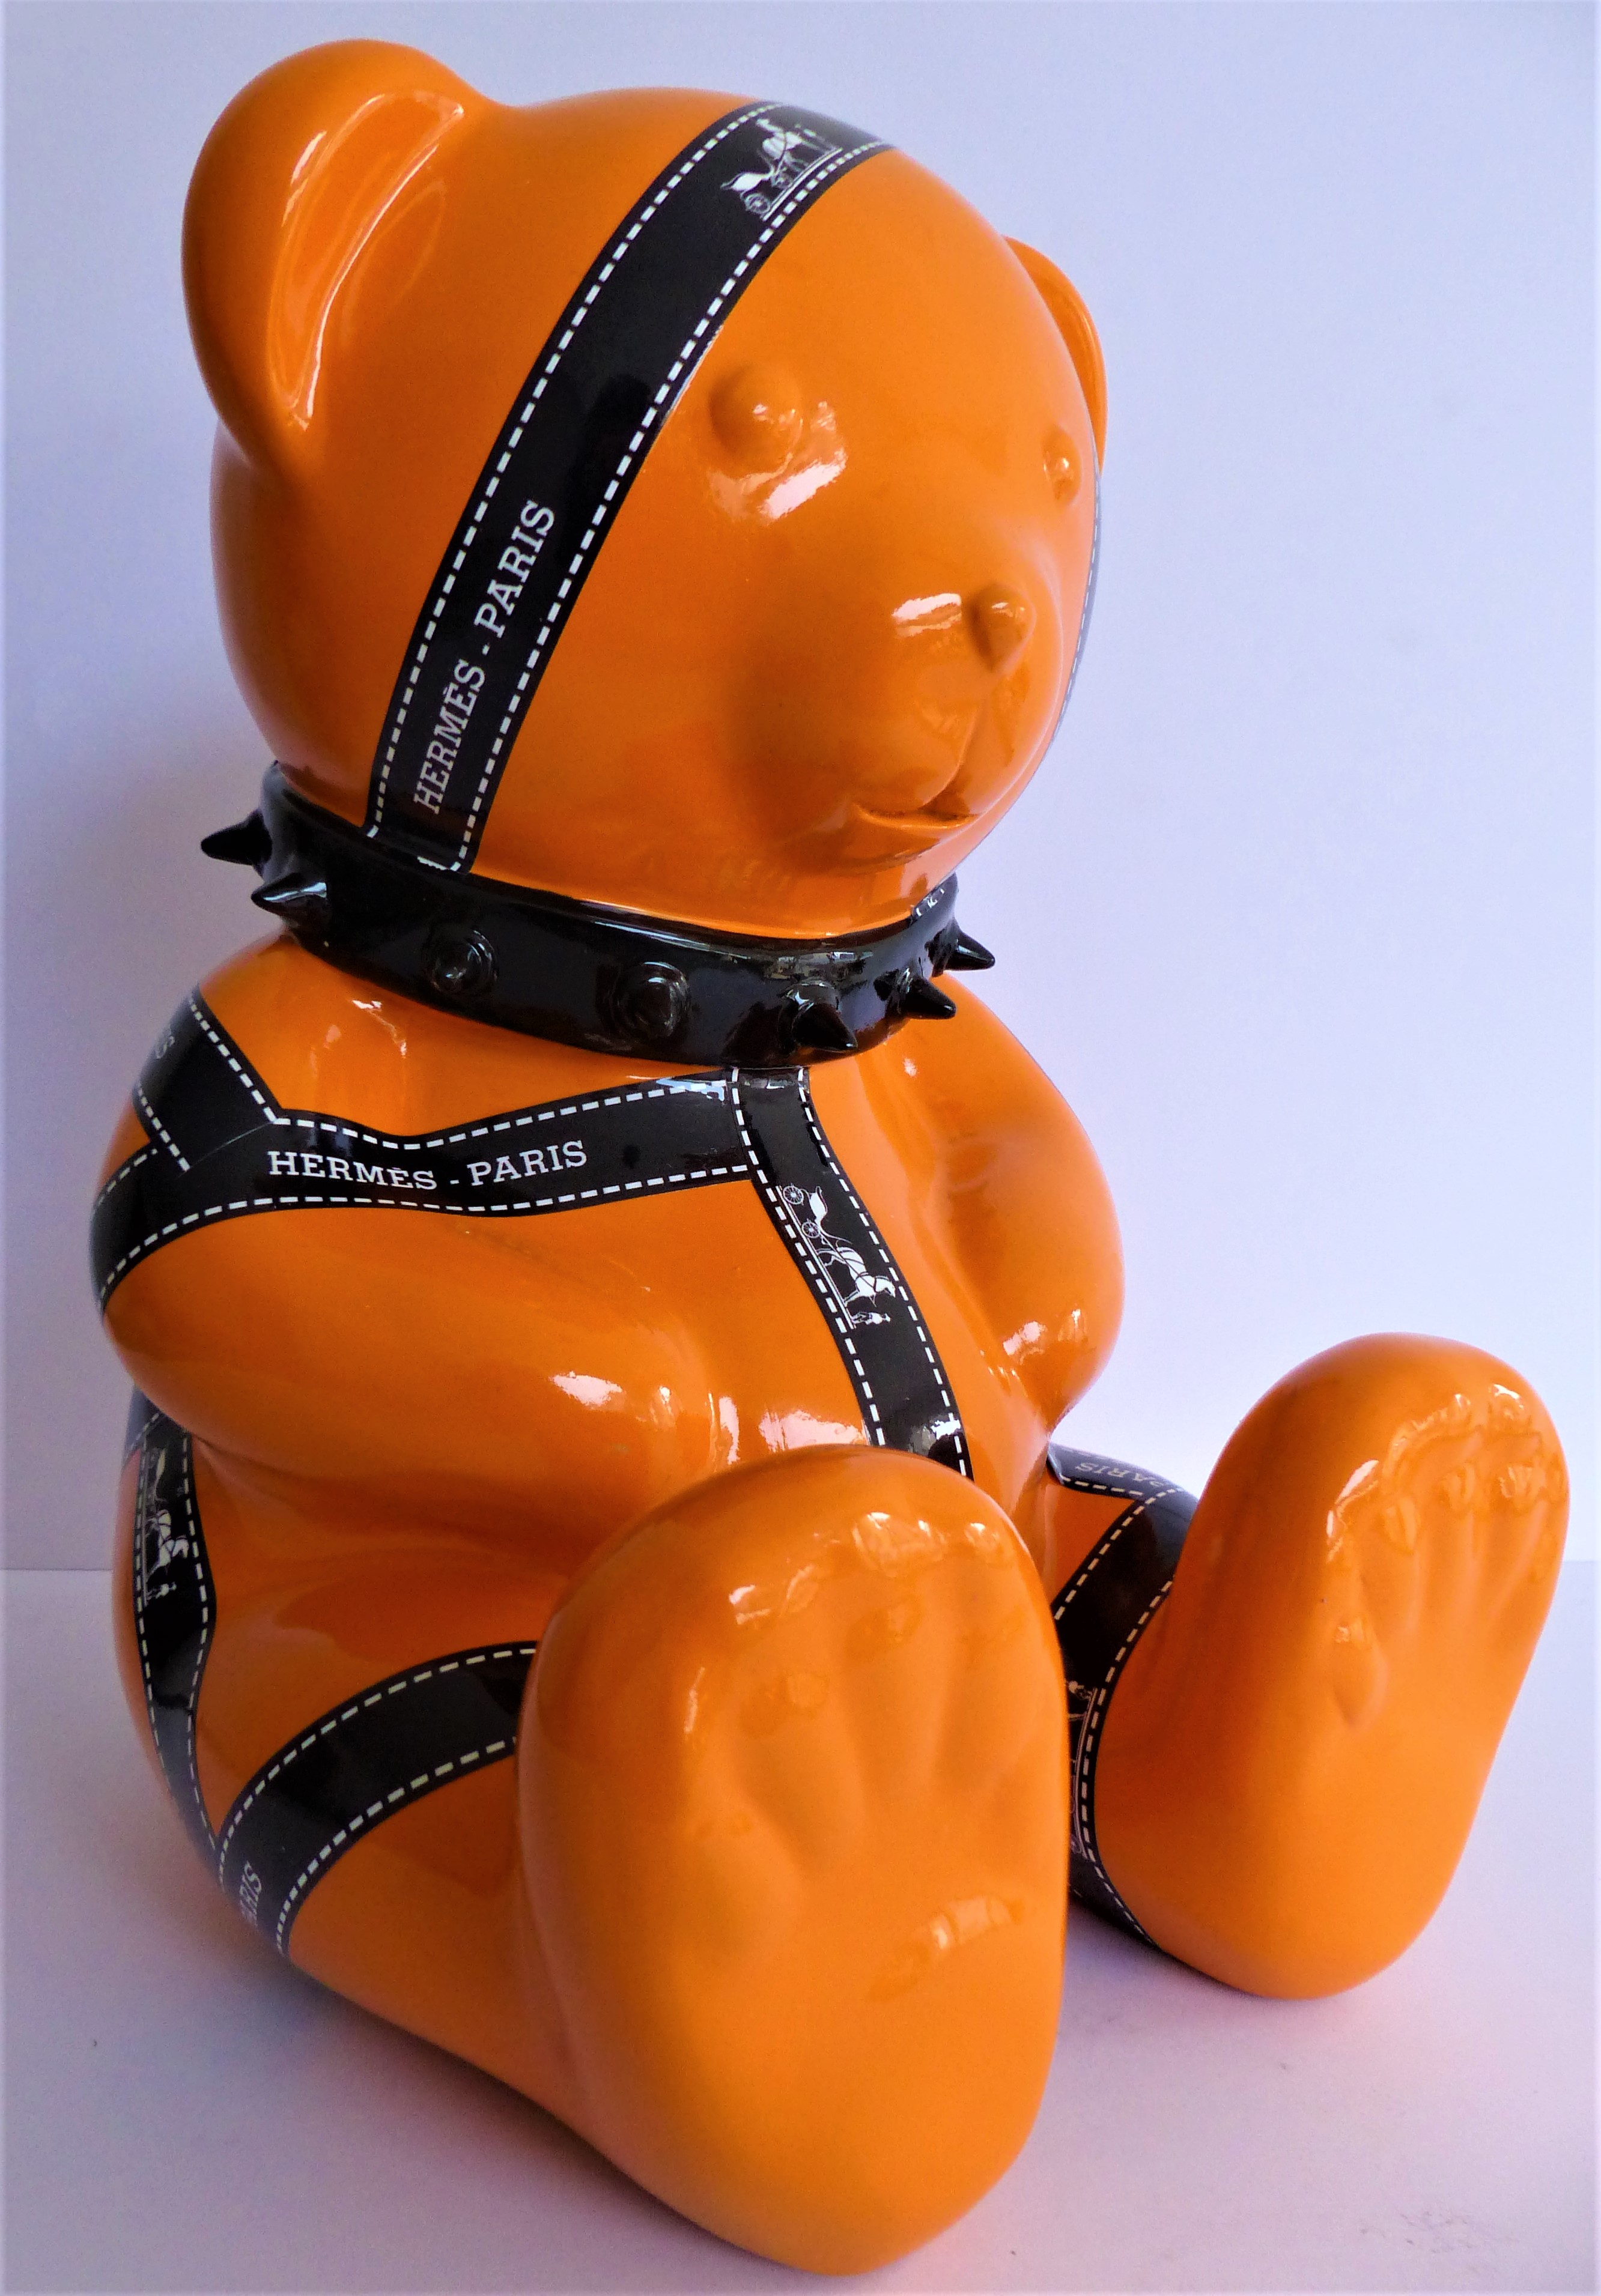 Patrick KONRAD - Hermès - Plazzart - Revelations Bear - Crazy Sculpture